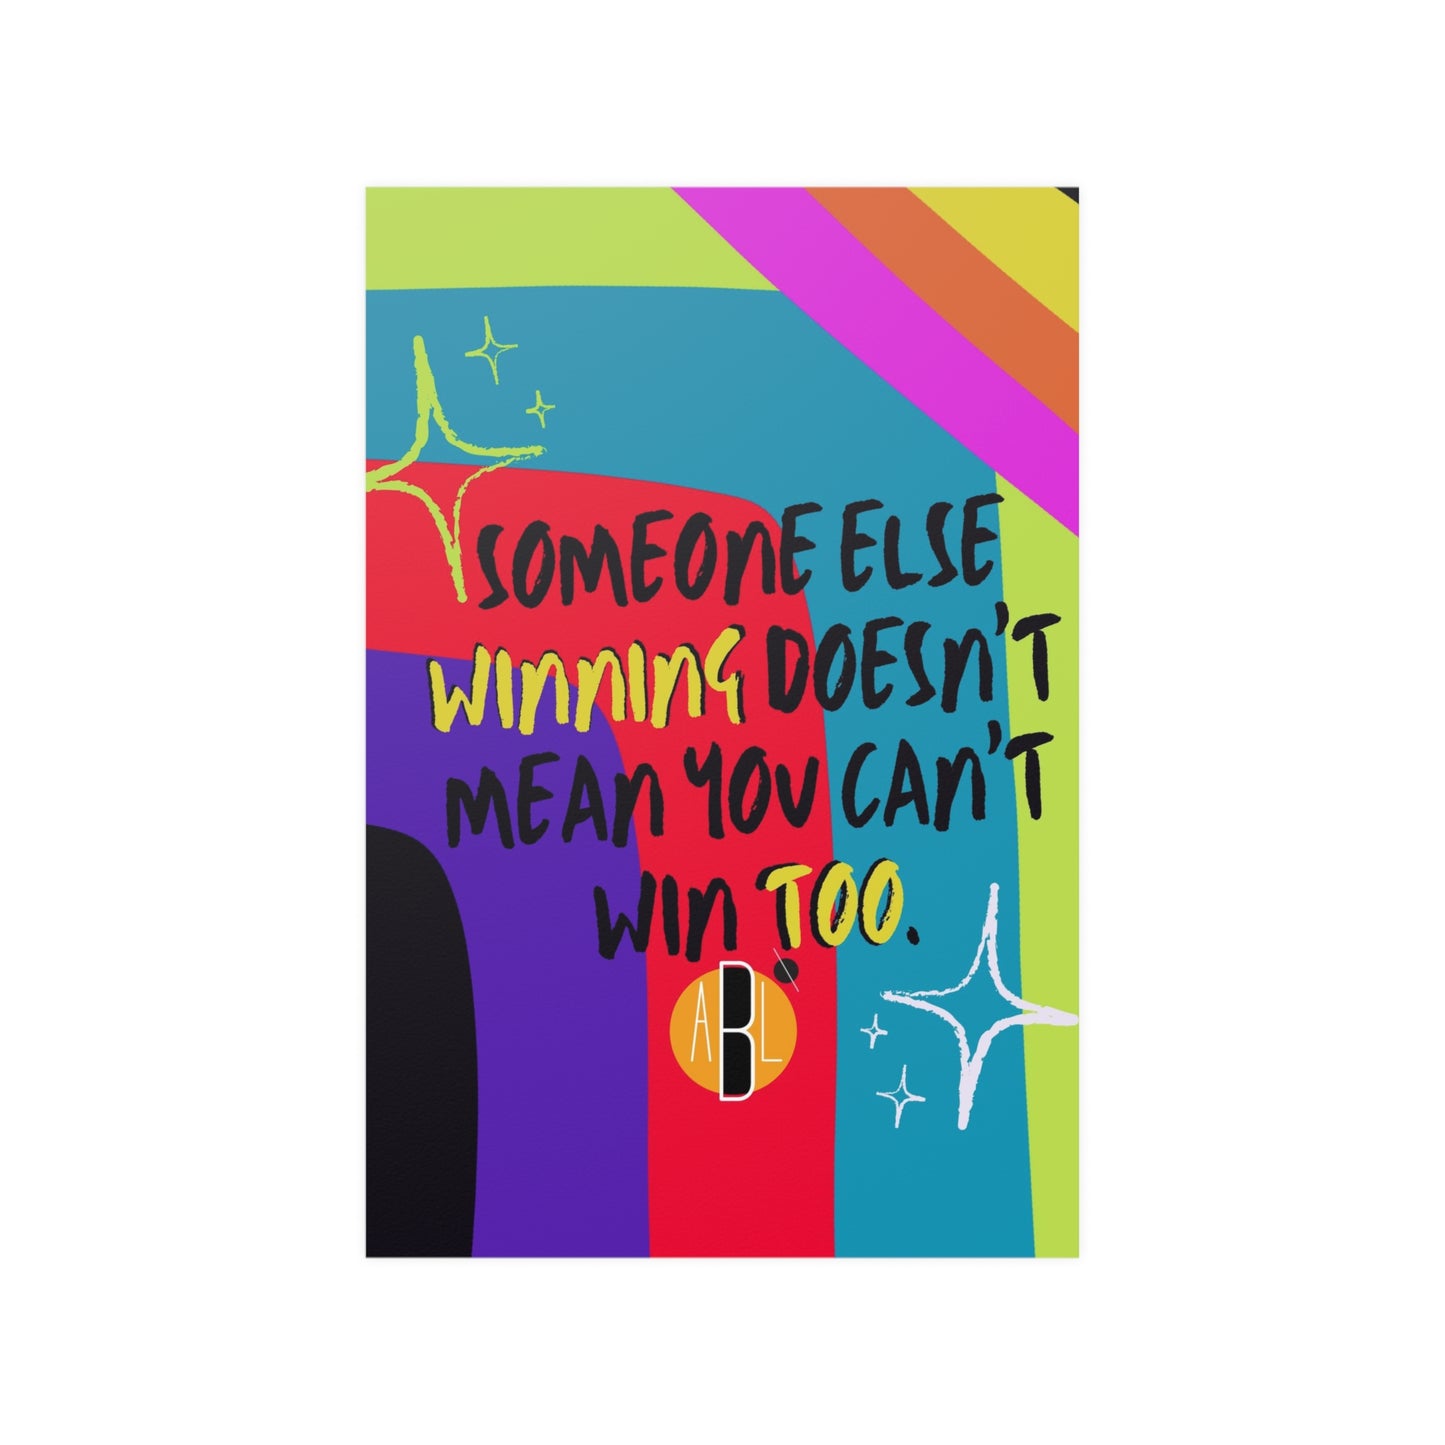 ABL Inspirational Poster: " Someone else..."